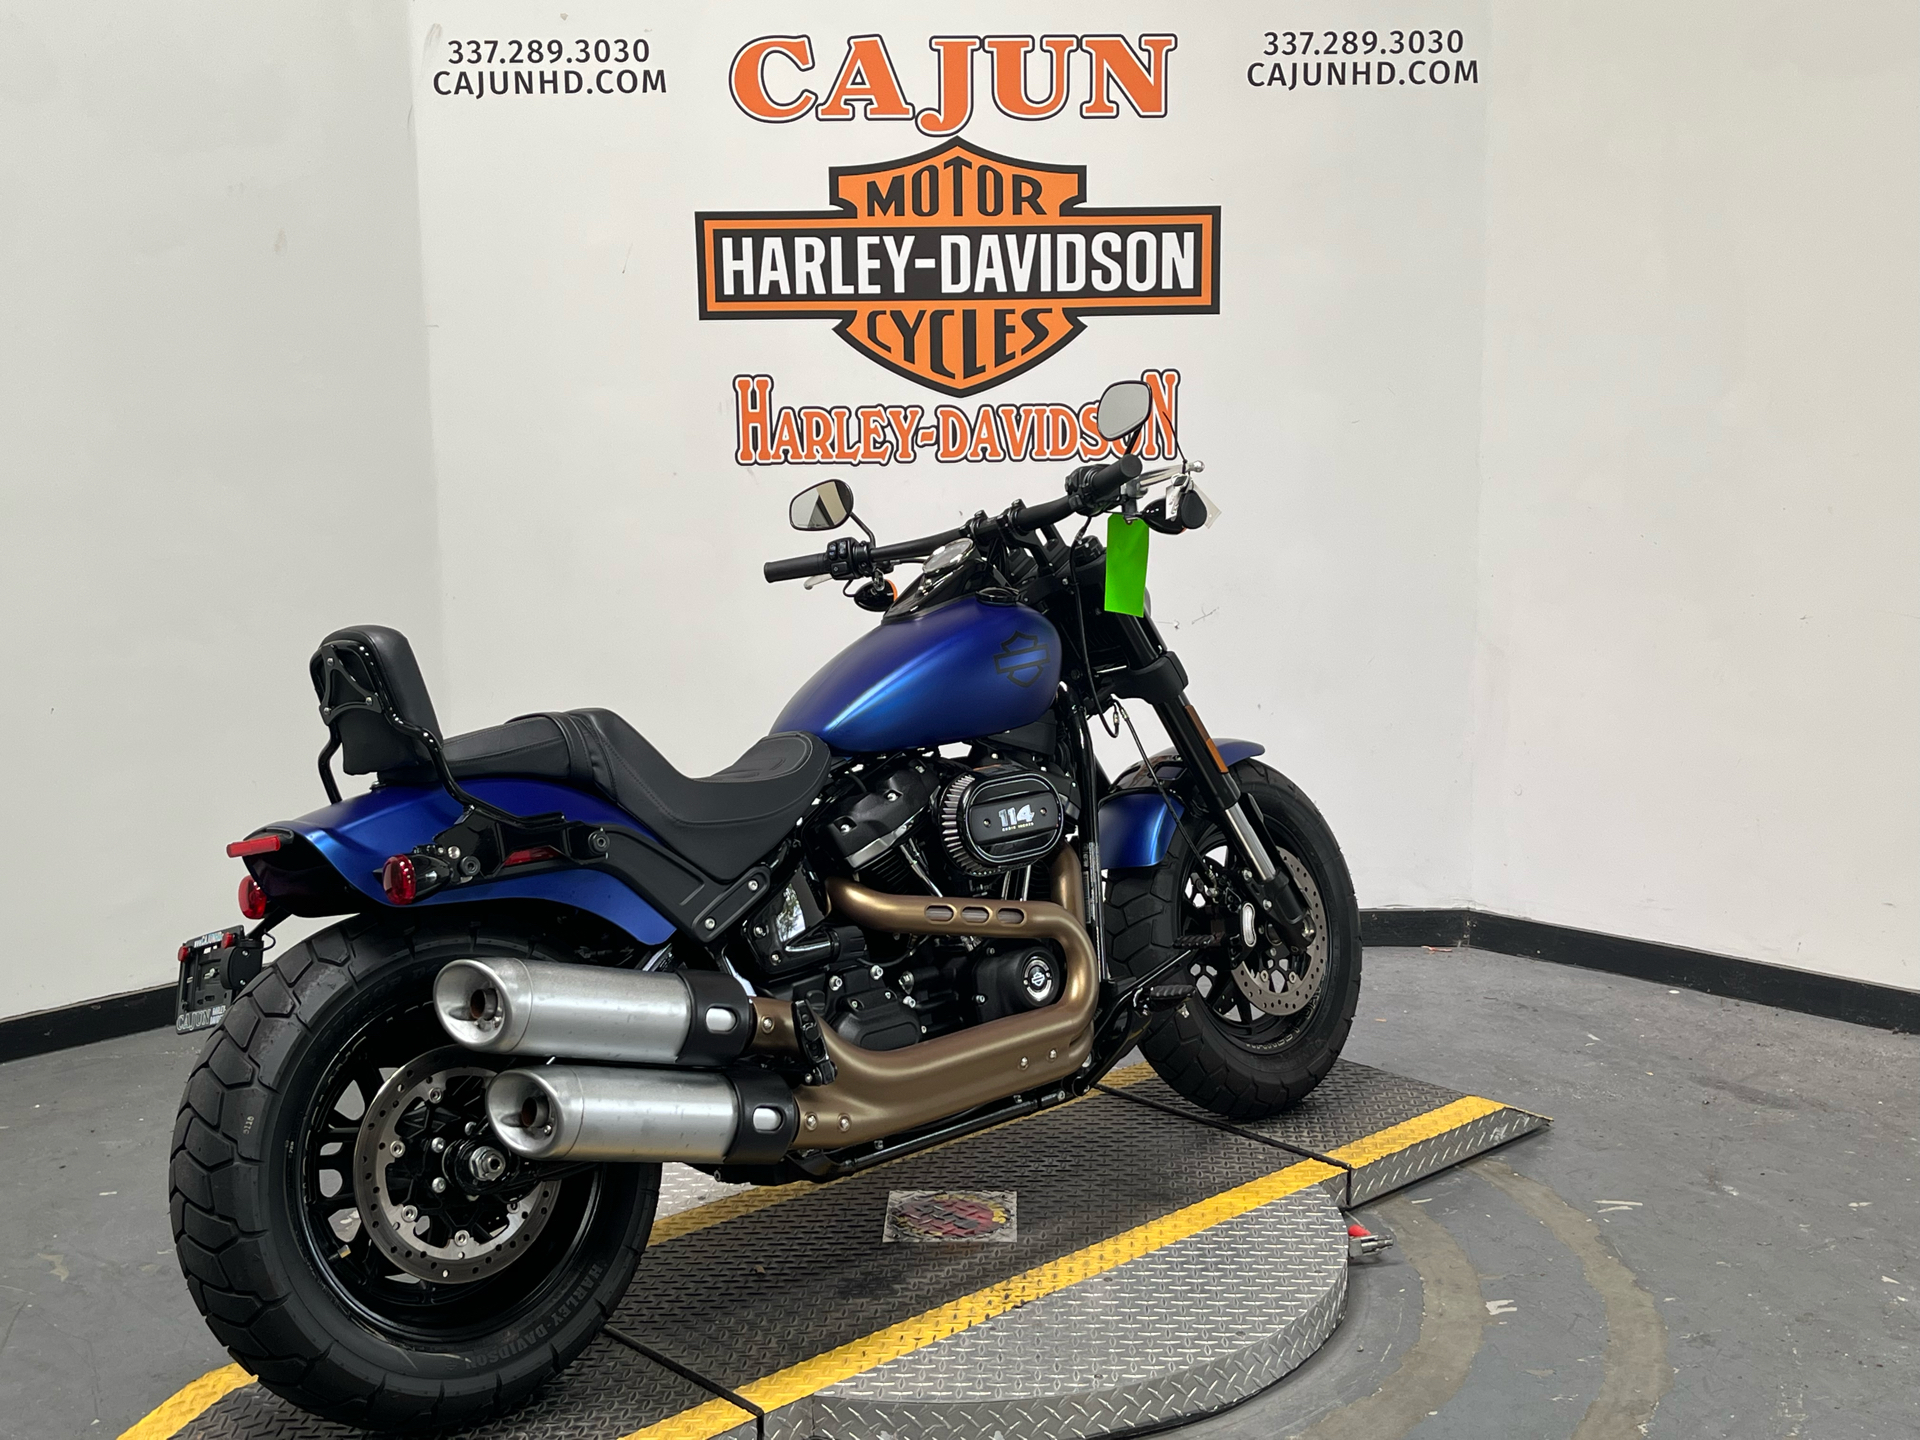 2021 Harley-Davidson Fat Boy Lafayette - Photo 8